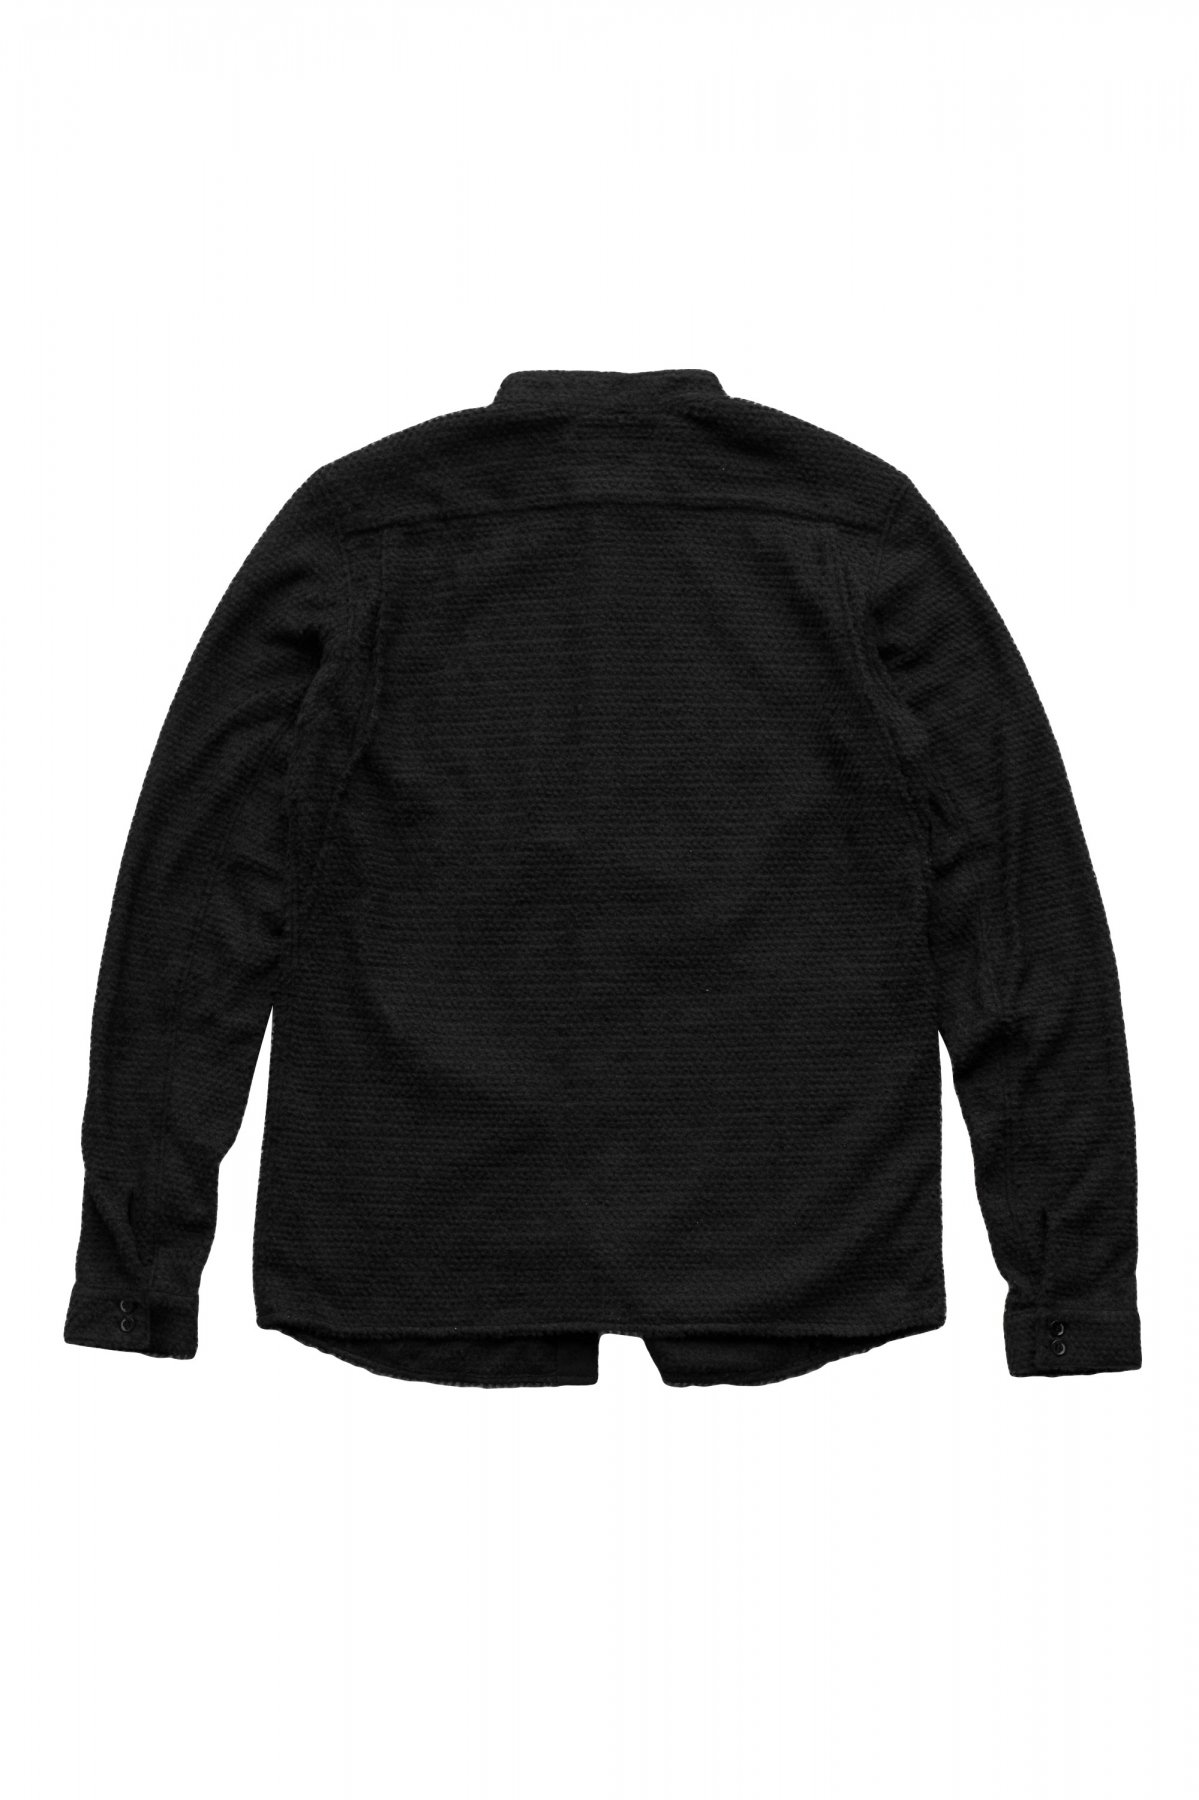 ACRONYM - LA6B-AD / Lofted Knit Fiber Long Sleeve Shirt - BLACK